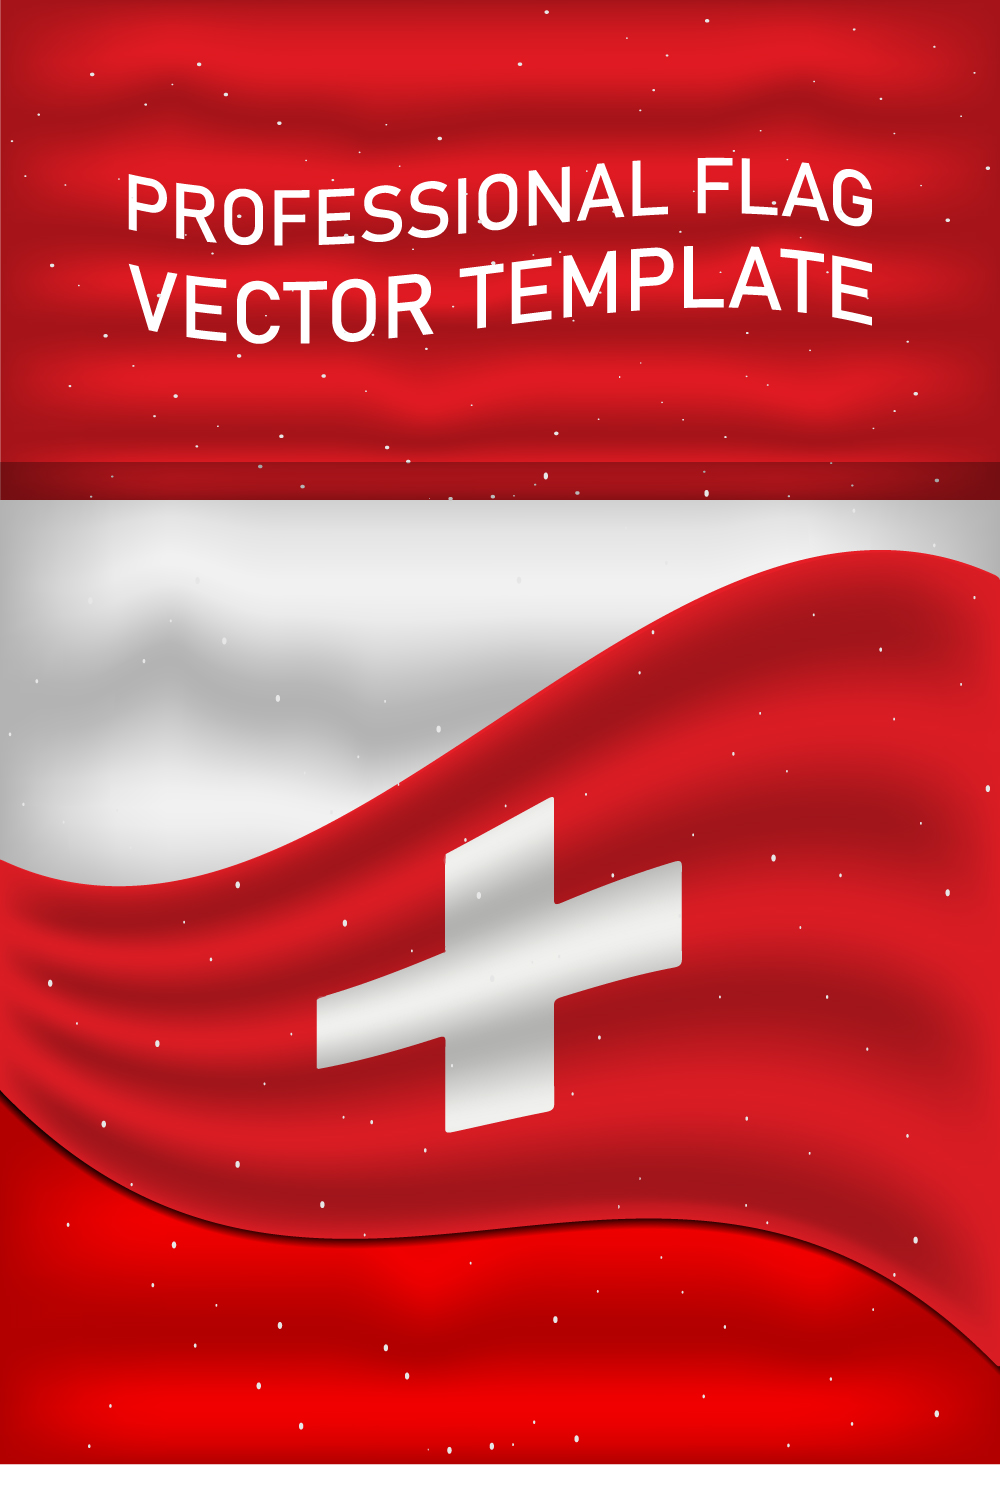 Irresistible image of the flag of Switzerland.